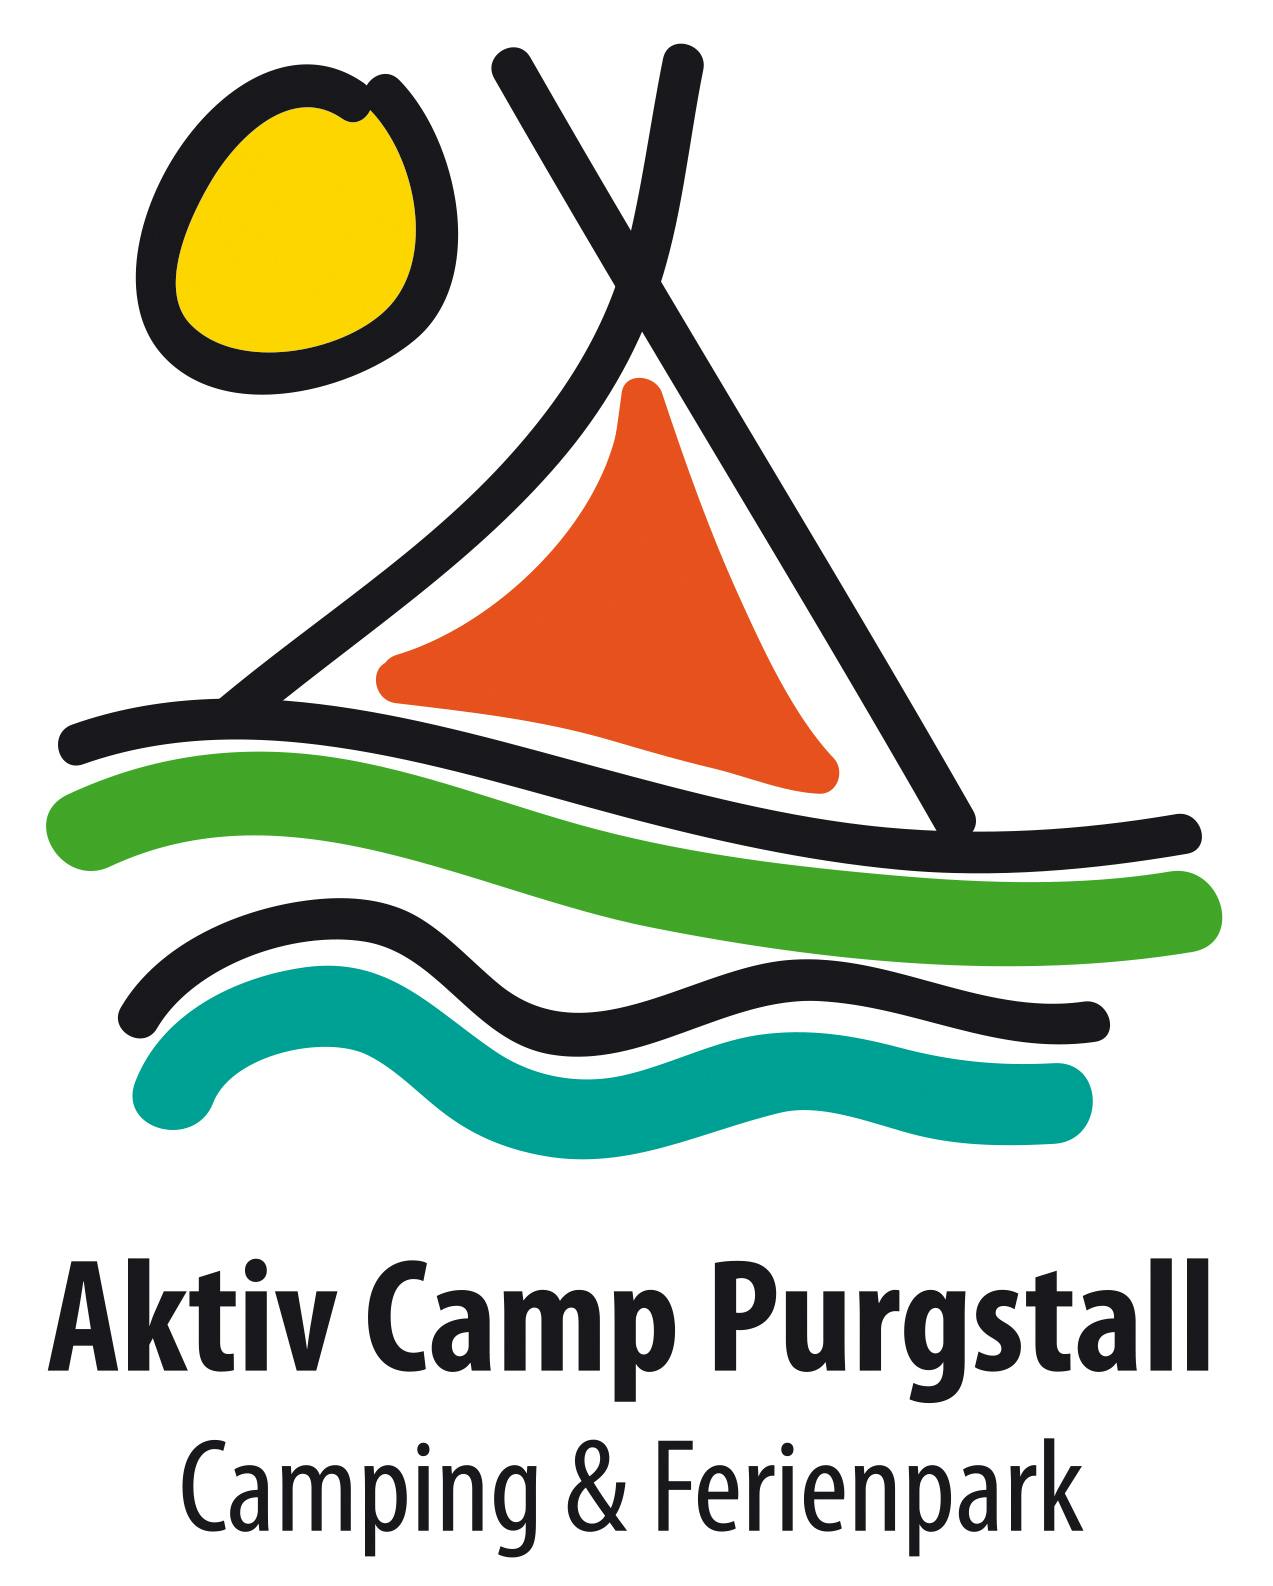 Aktiv Camp Purgstall